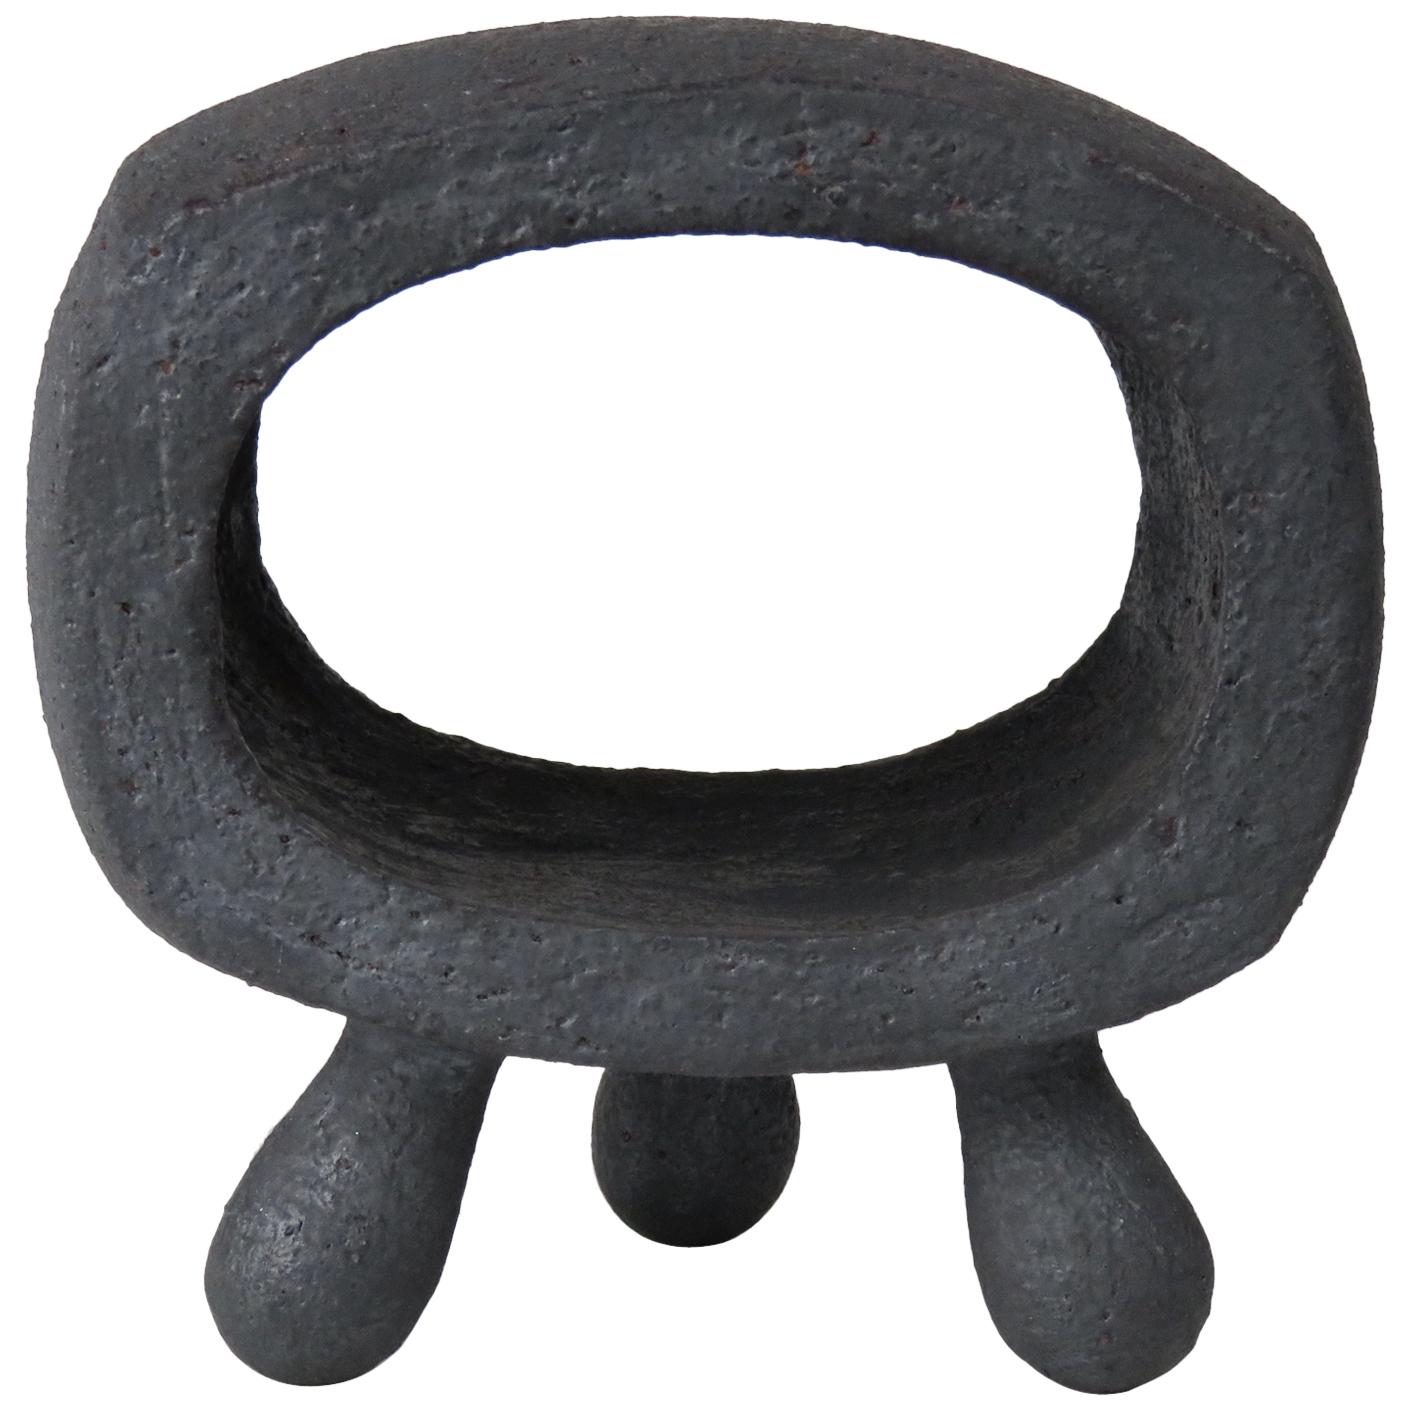 Small Dark Silver-Gray Hollow Rectangular Ring Ceramic Sculpture on 3 Legs